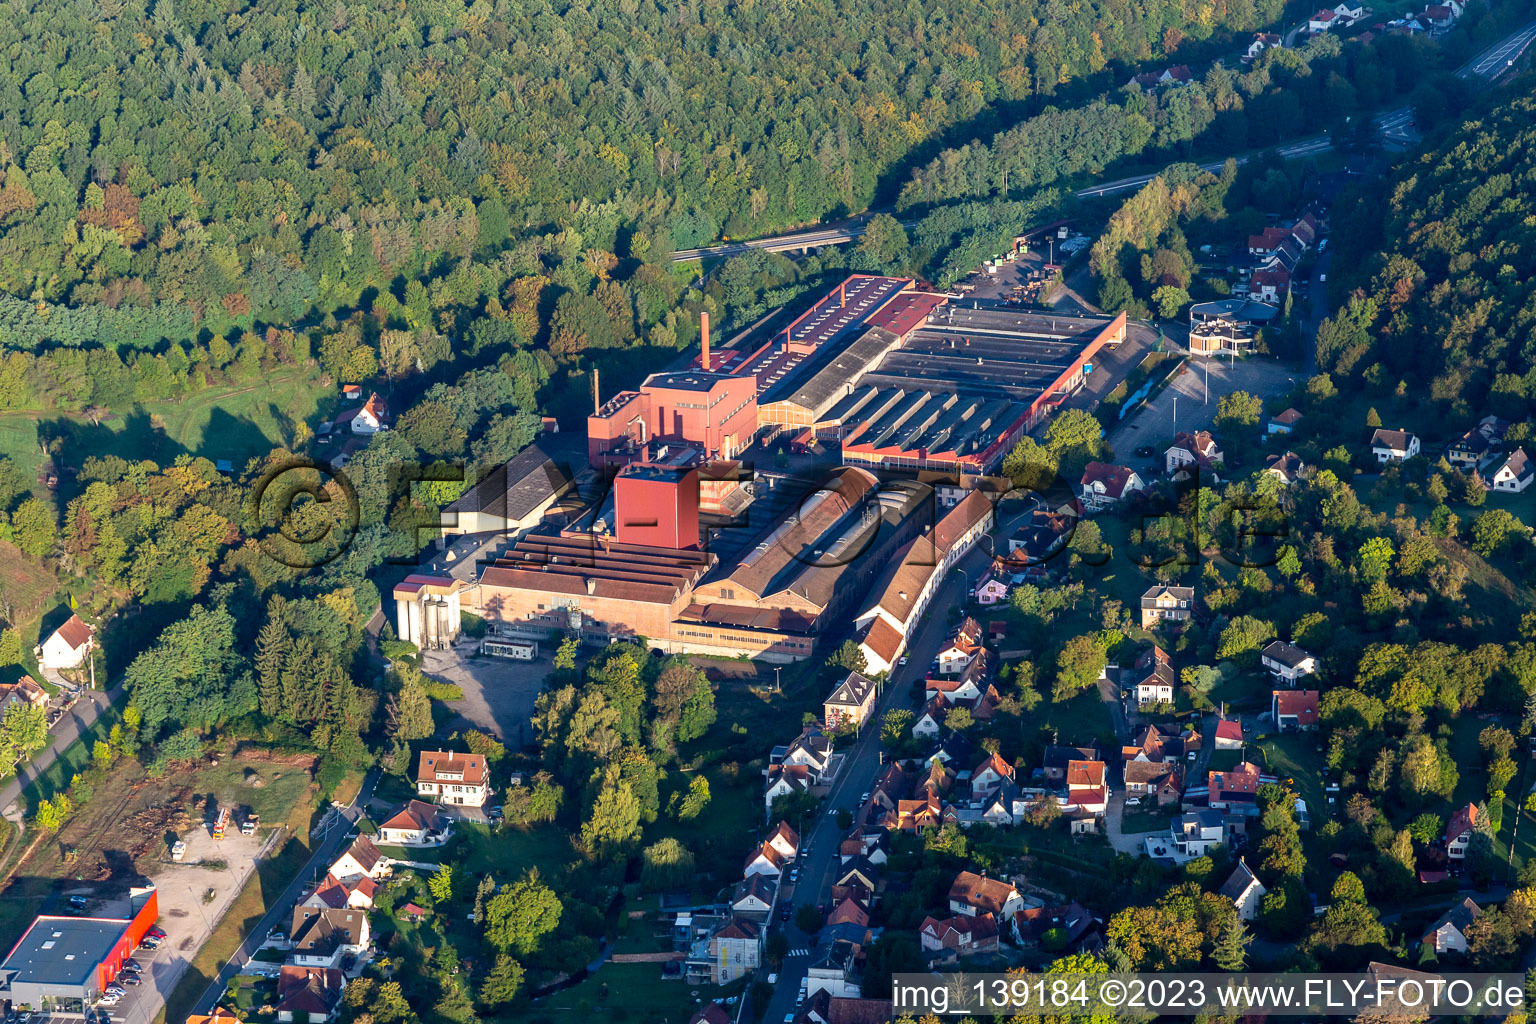 Luftbild von FONDERIE DE NIEDERBRONN in Niederbronn-les-Bains im Bundesland Bas-Rhin, Frankreich